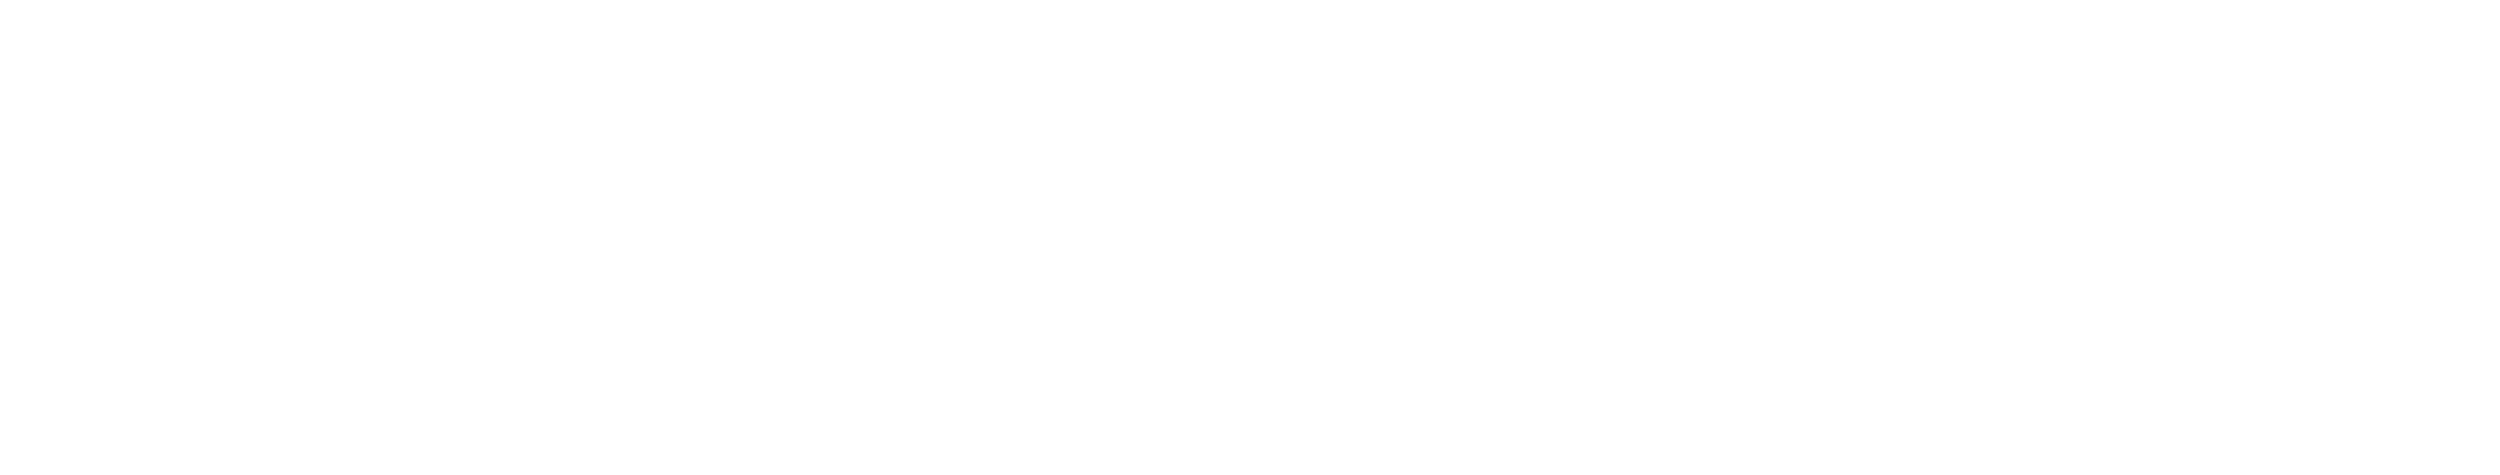 Edmonton River Valley Conservation Coalition